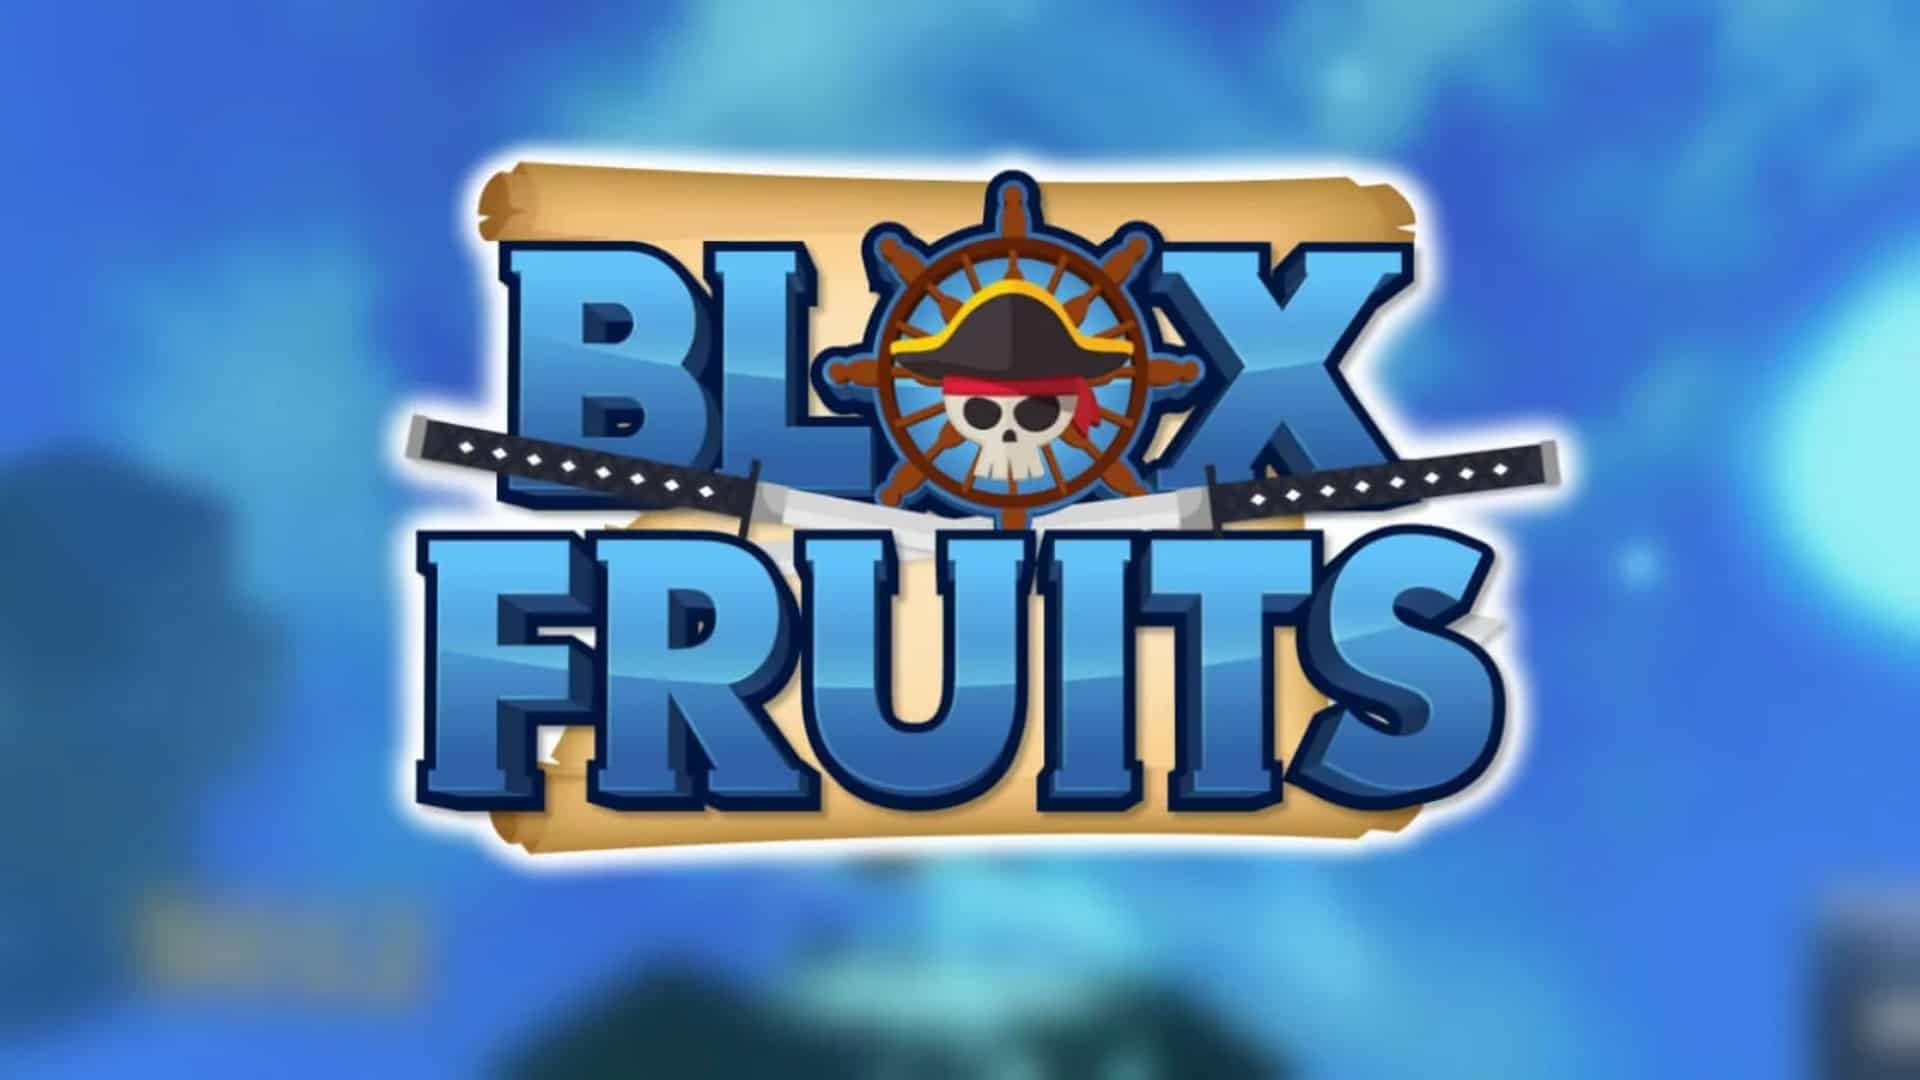 Old phoenix vs new phoenix  roblox blox fruits update 17.3 